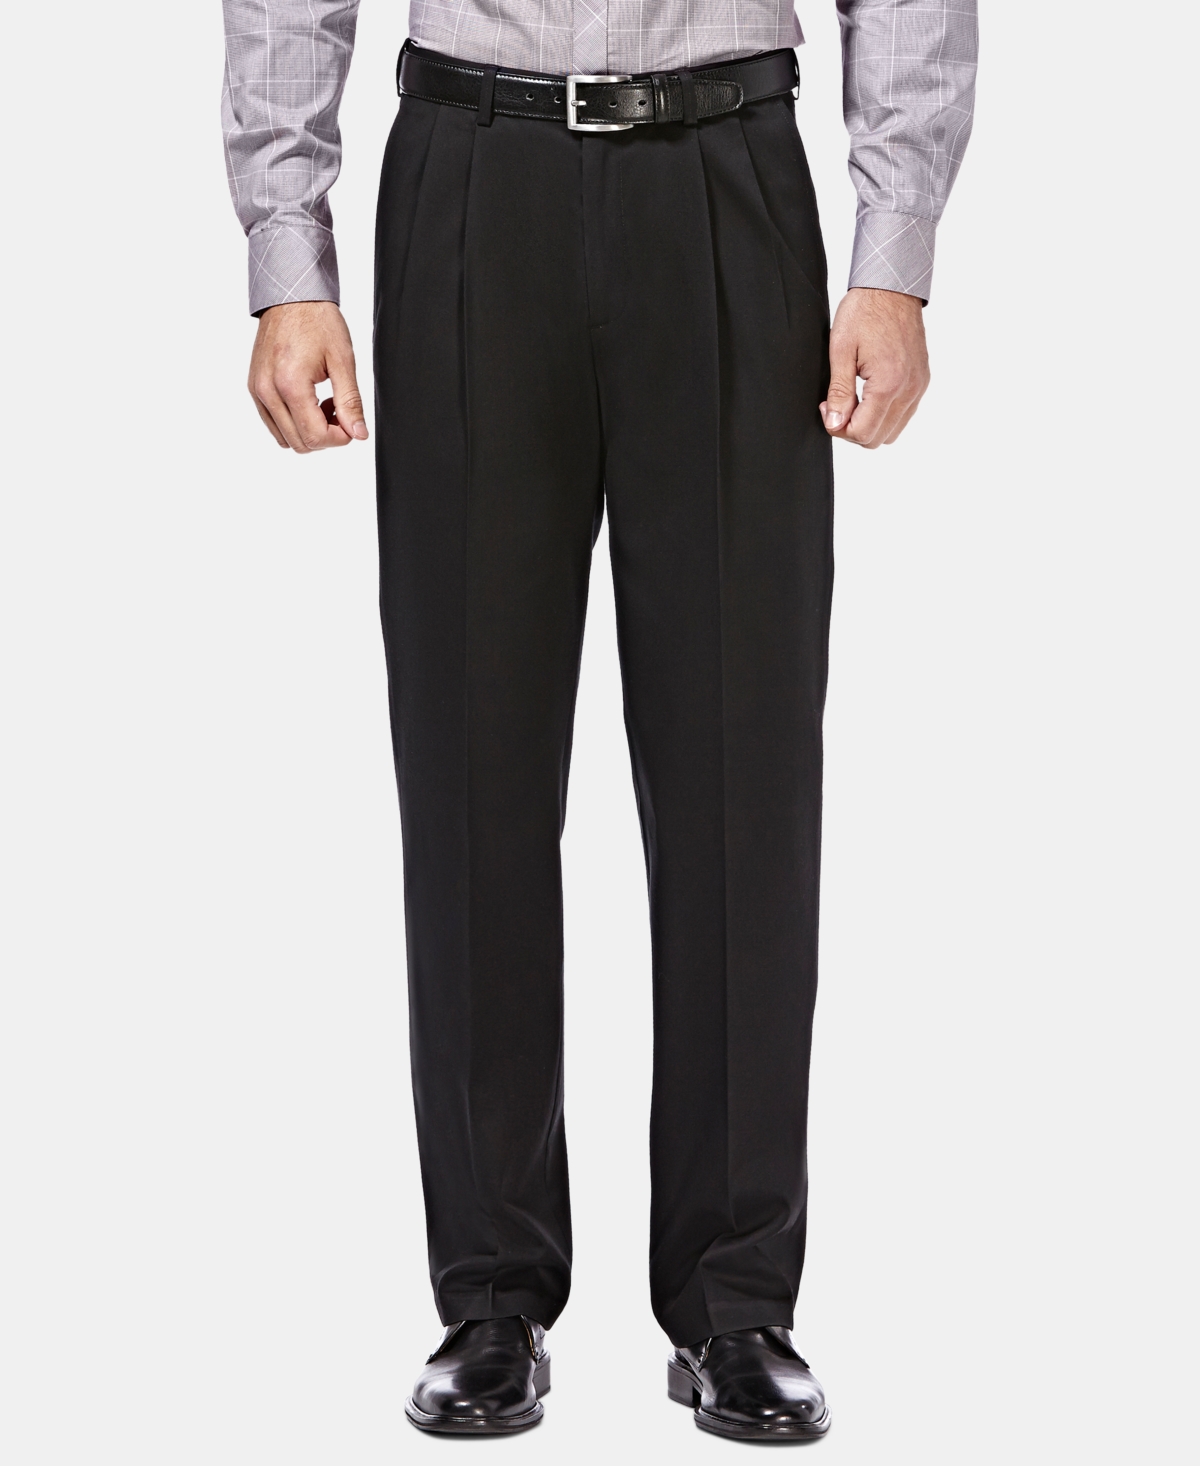 Men's Premium No Iron Khaki Classic Fit Pleat Hidden Expandable Waist Pants - Khaki